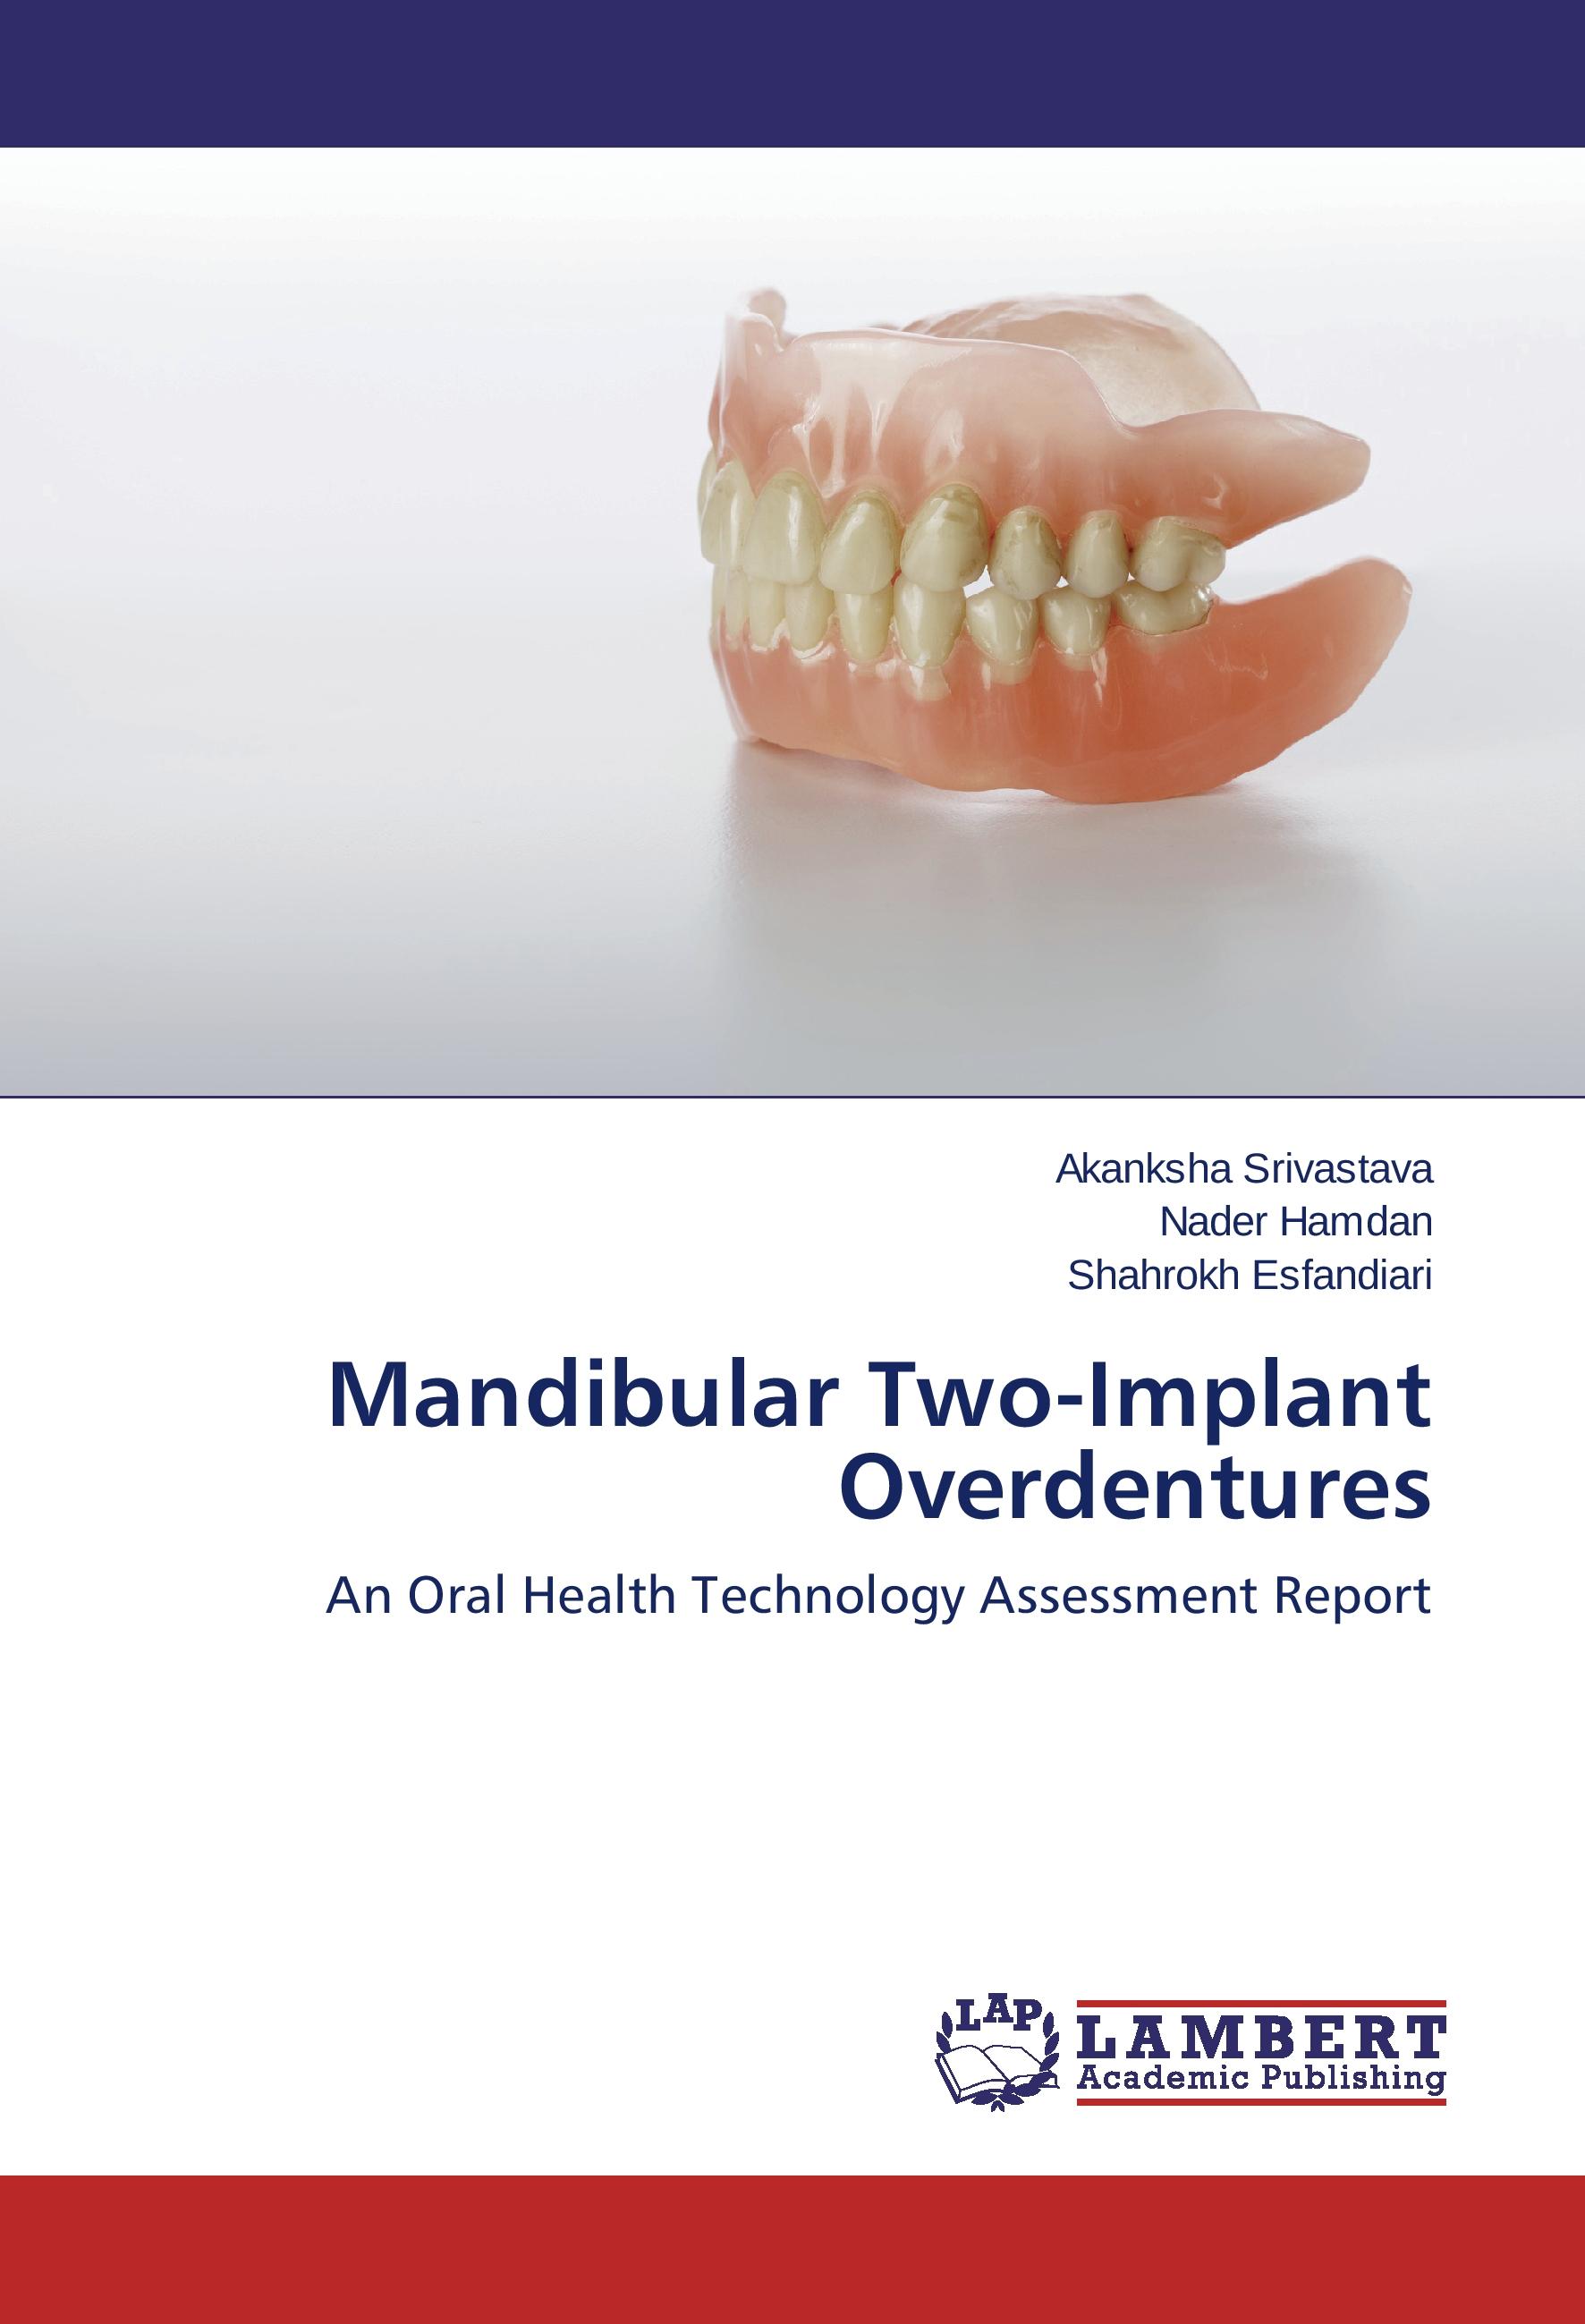 Mandibular Two-Implant Overdentures - Akanksha Srivastava Nader Hamdan Shahrokh Esfandiari